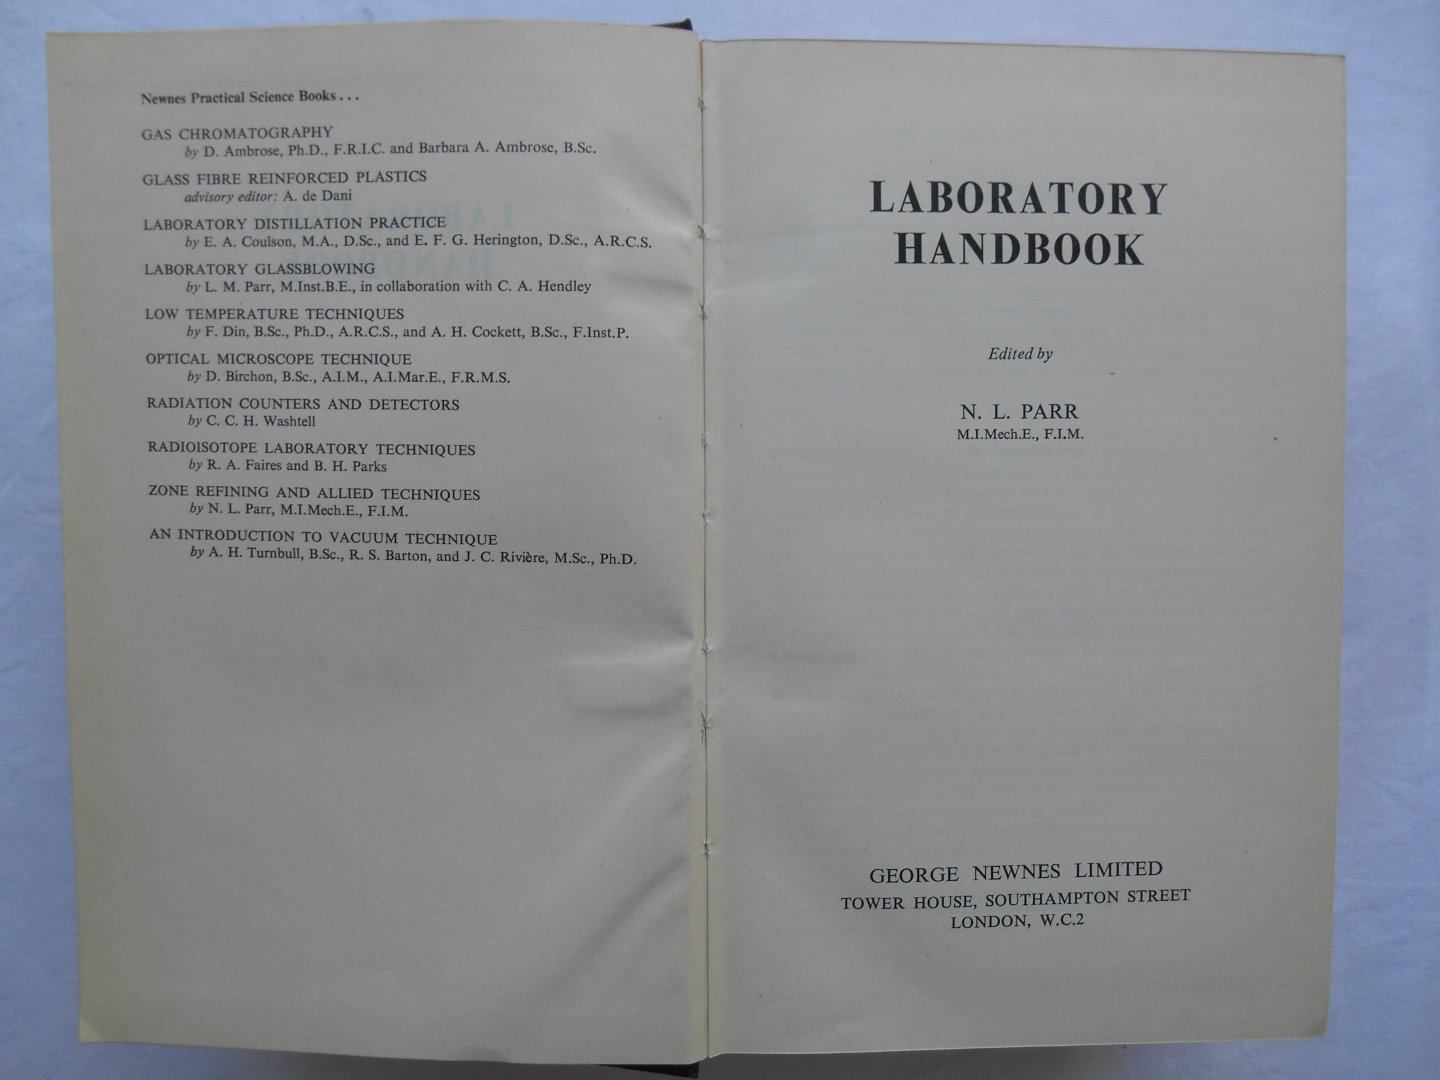 Parr, N.L. - Laboratory Handbook